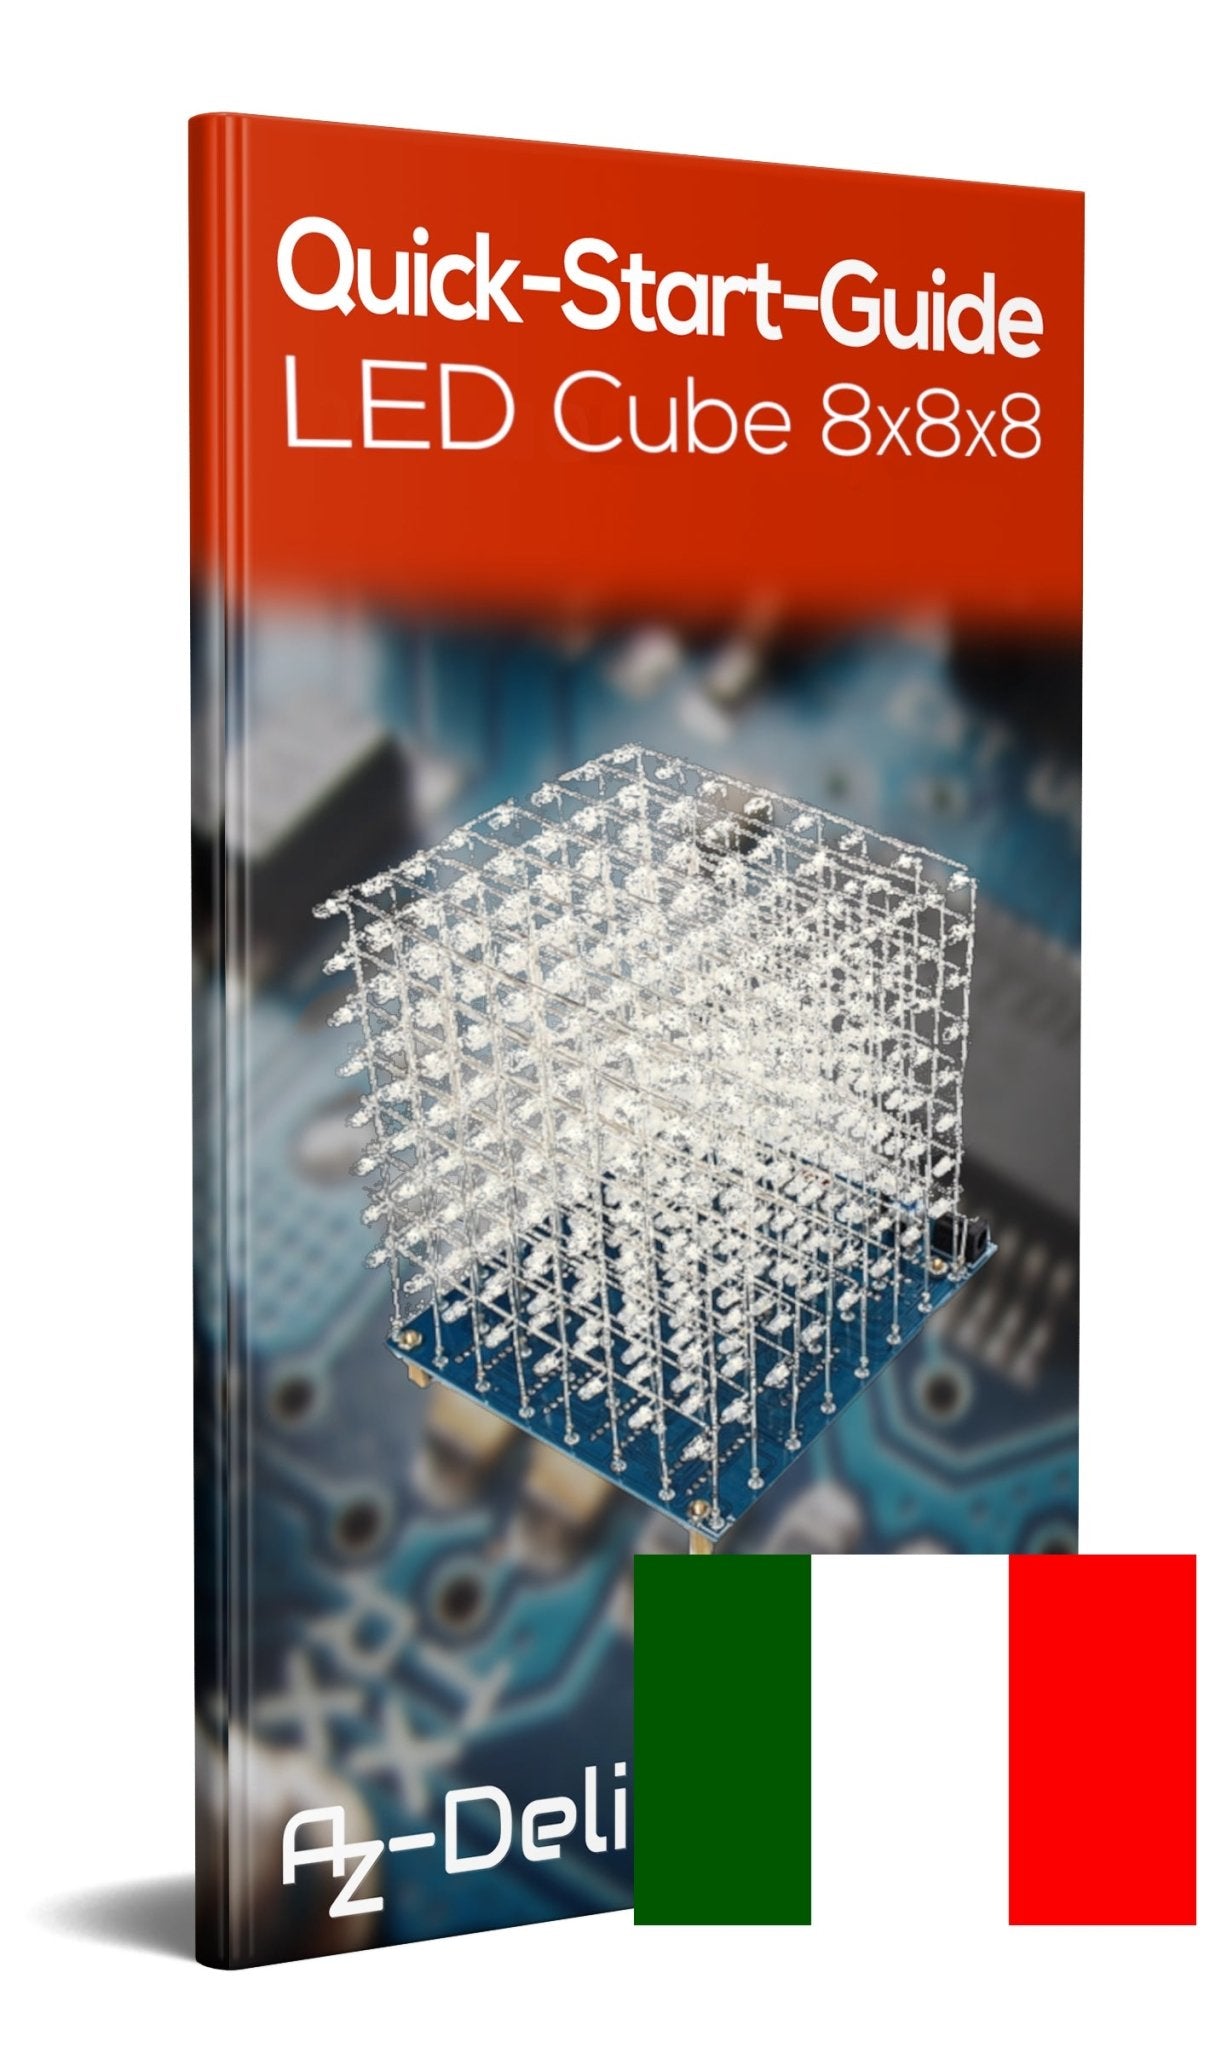 3D LED Cube 8x8x8 Light Matrix cube kit for soldering